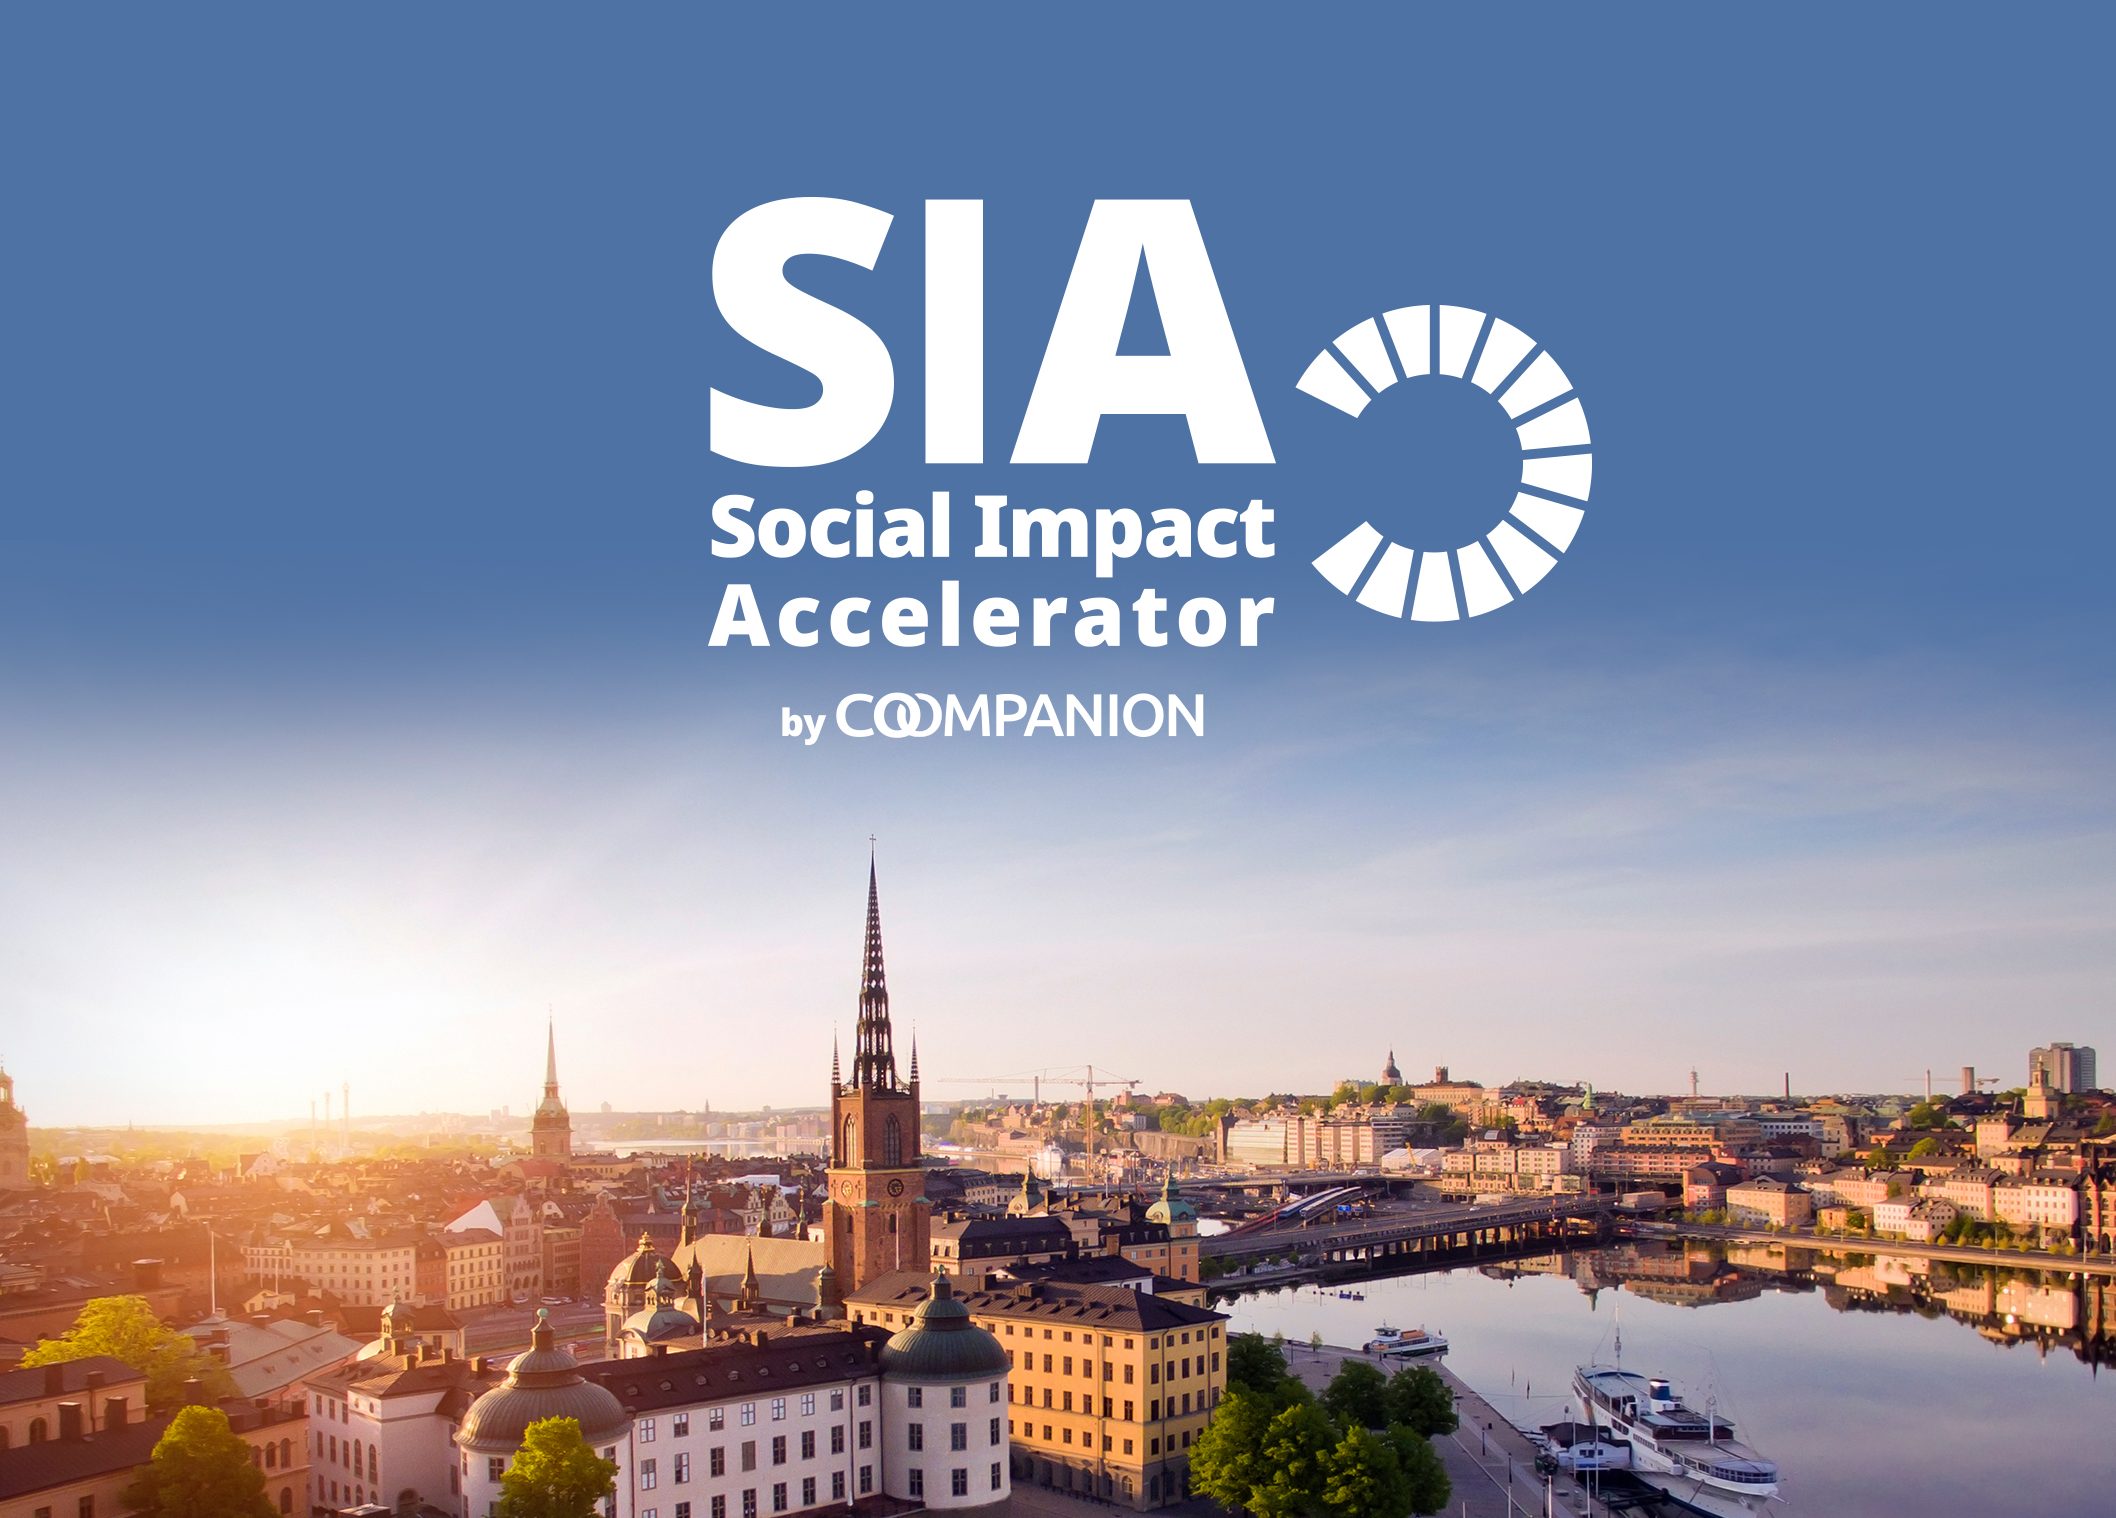 Social Impact Accelerator